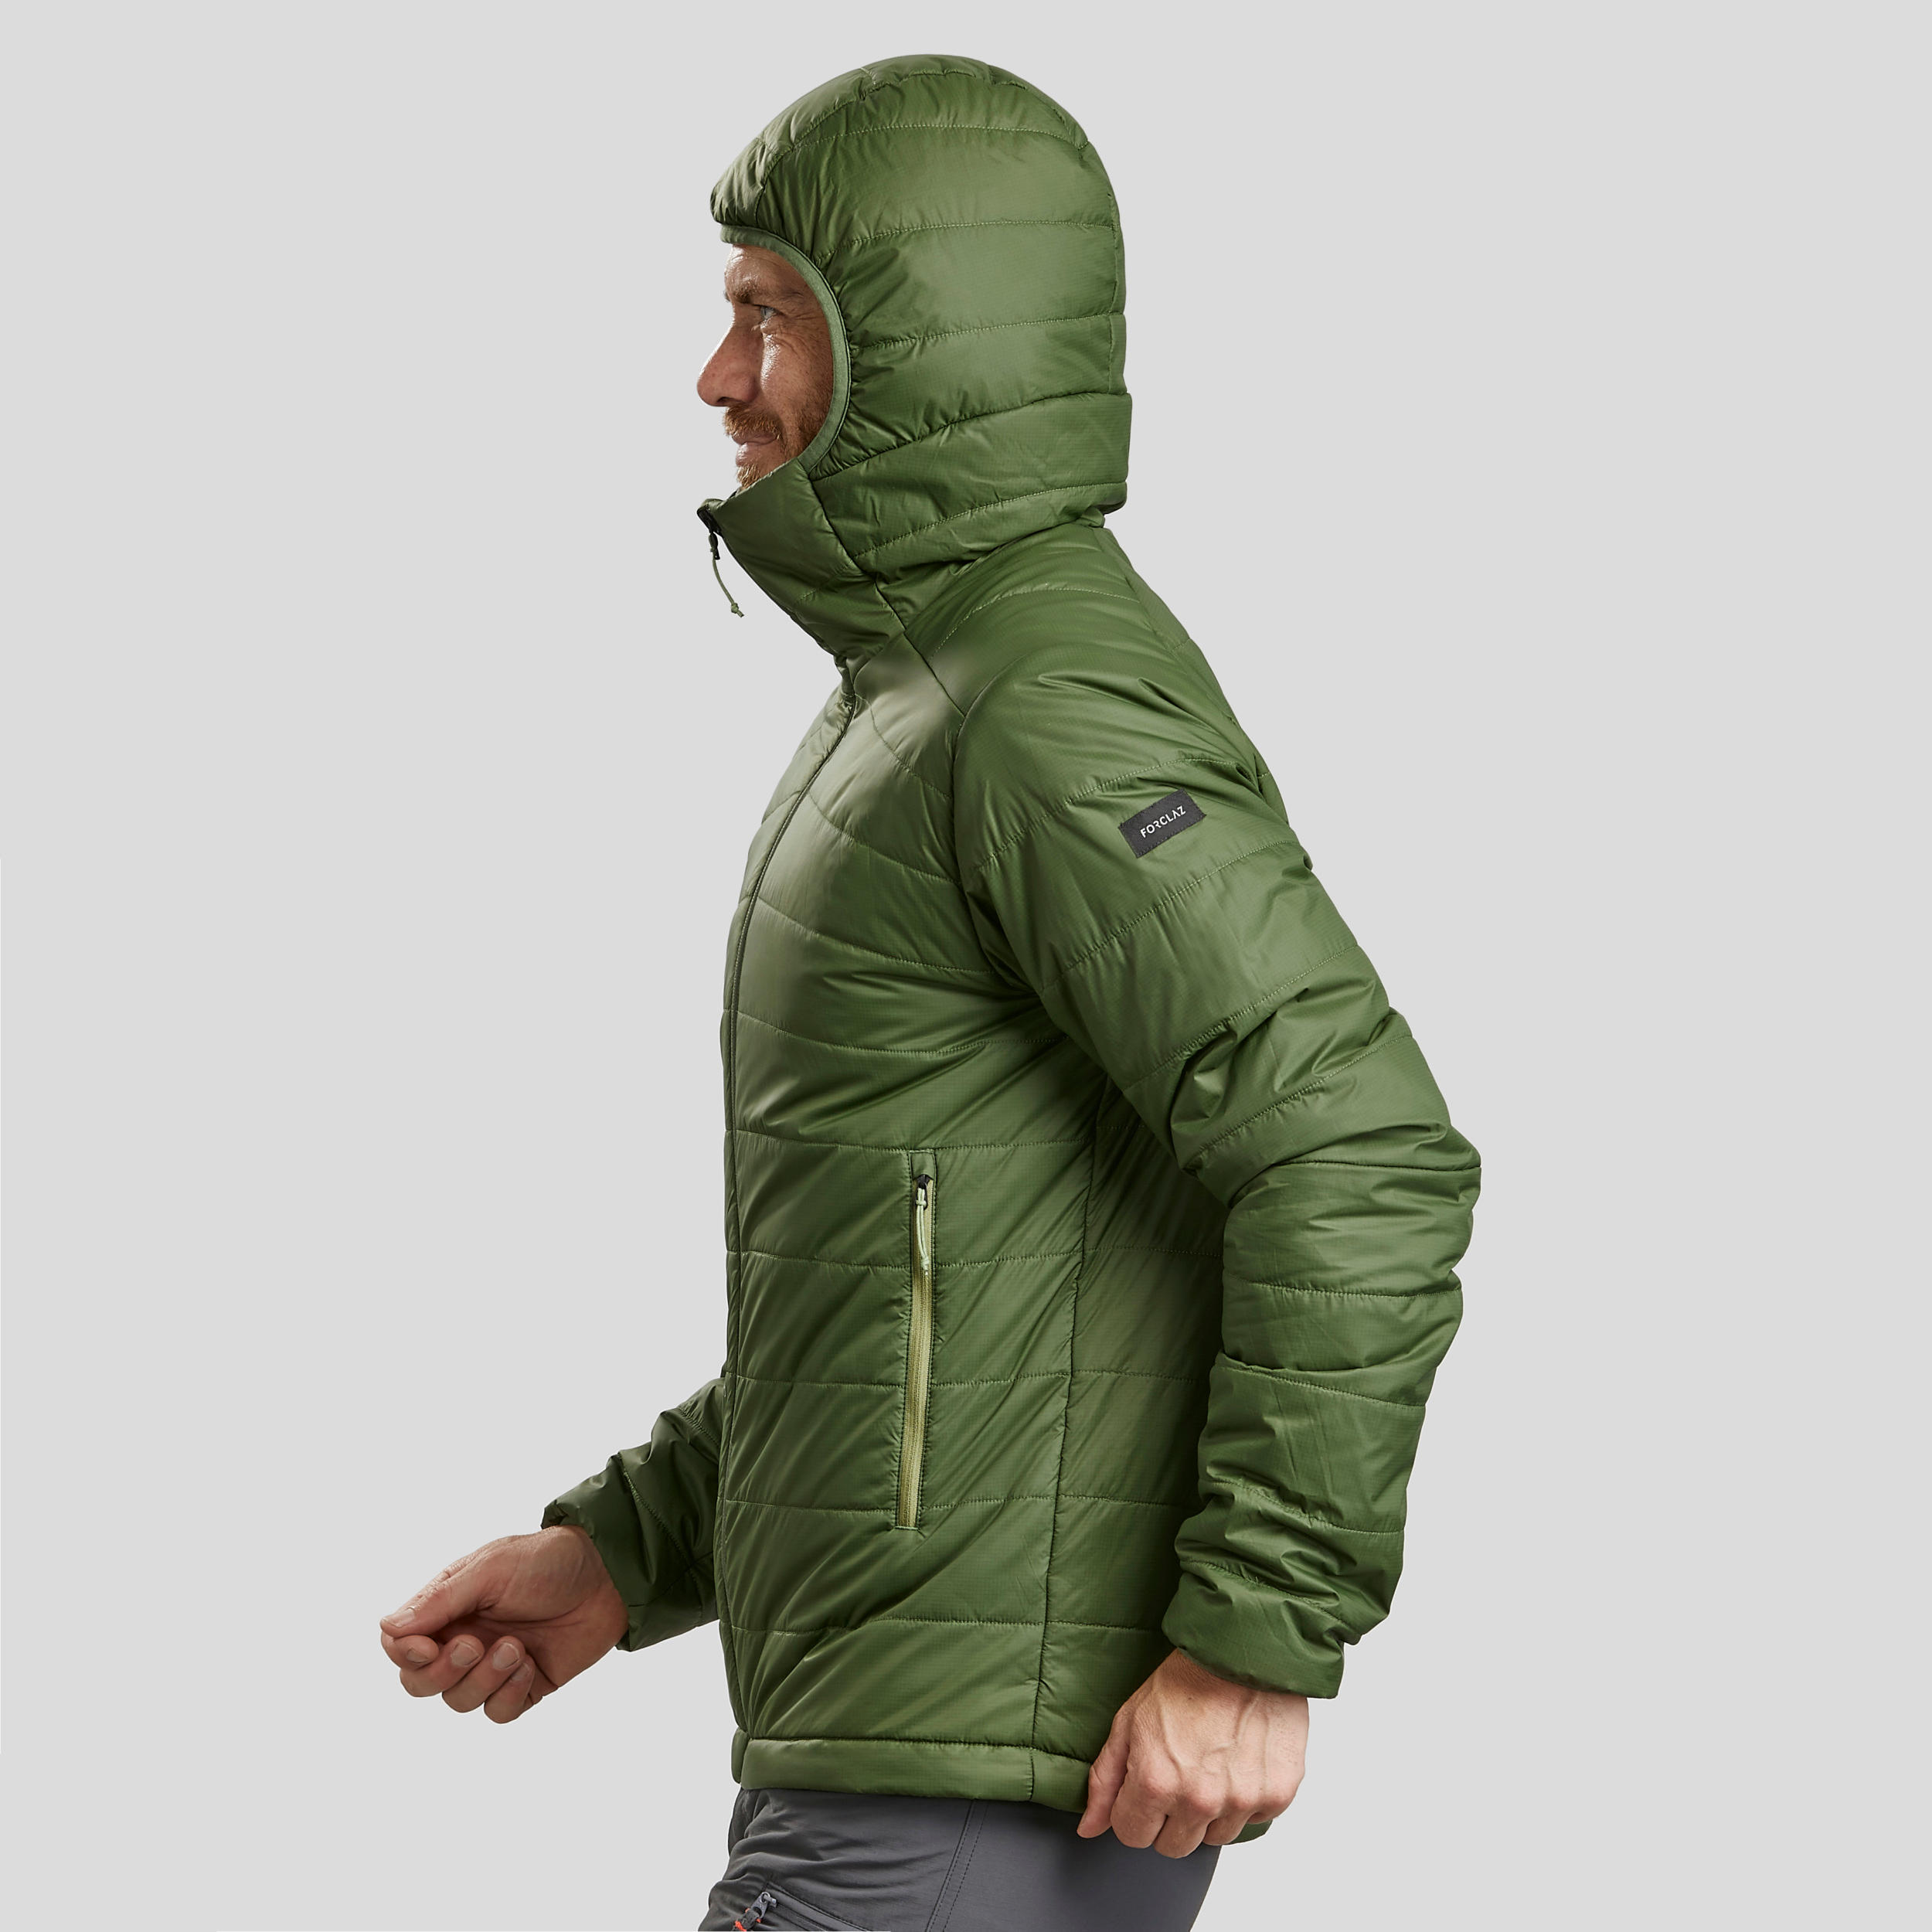 M Synthetic Mountain Trekking Padded Jacket - TREK 100 with hood  -5°C - Green 3/8